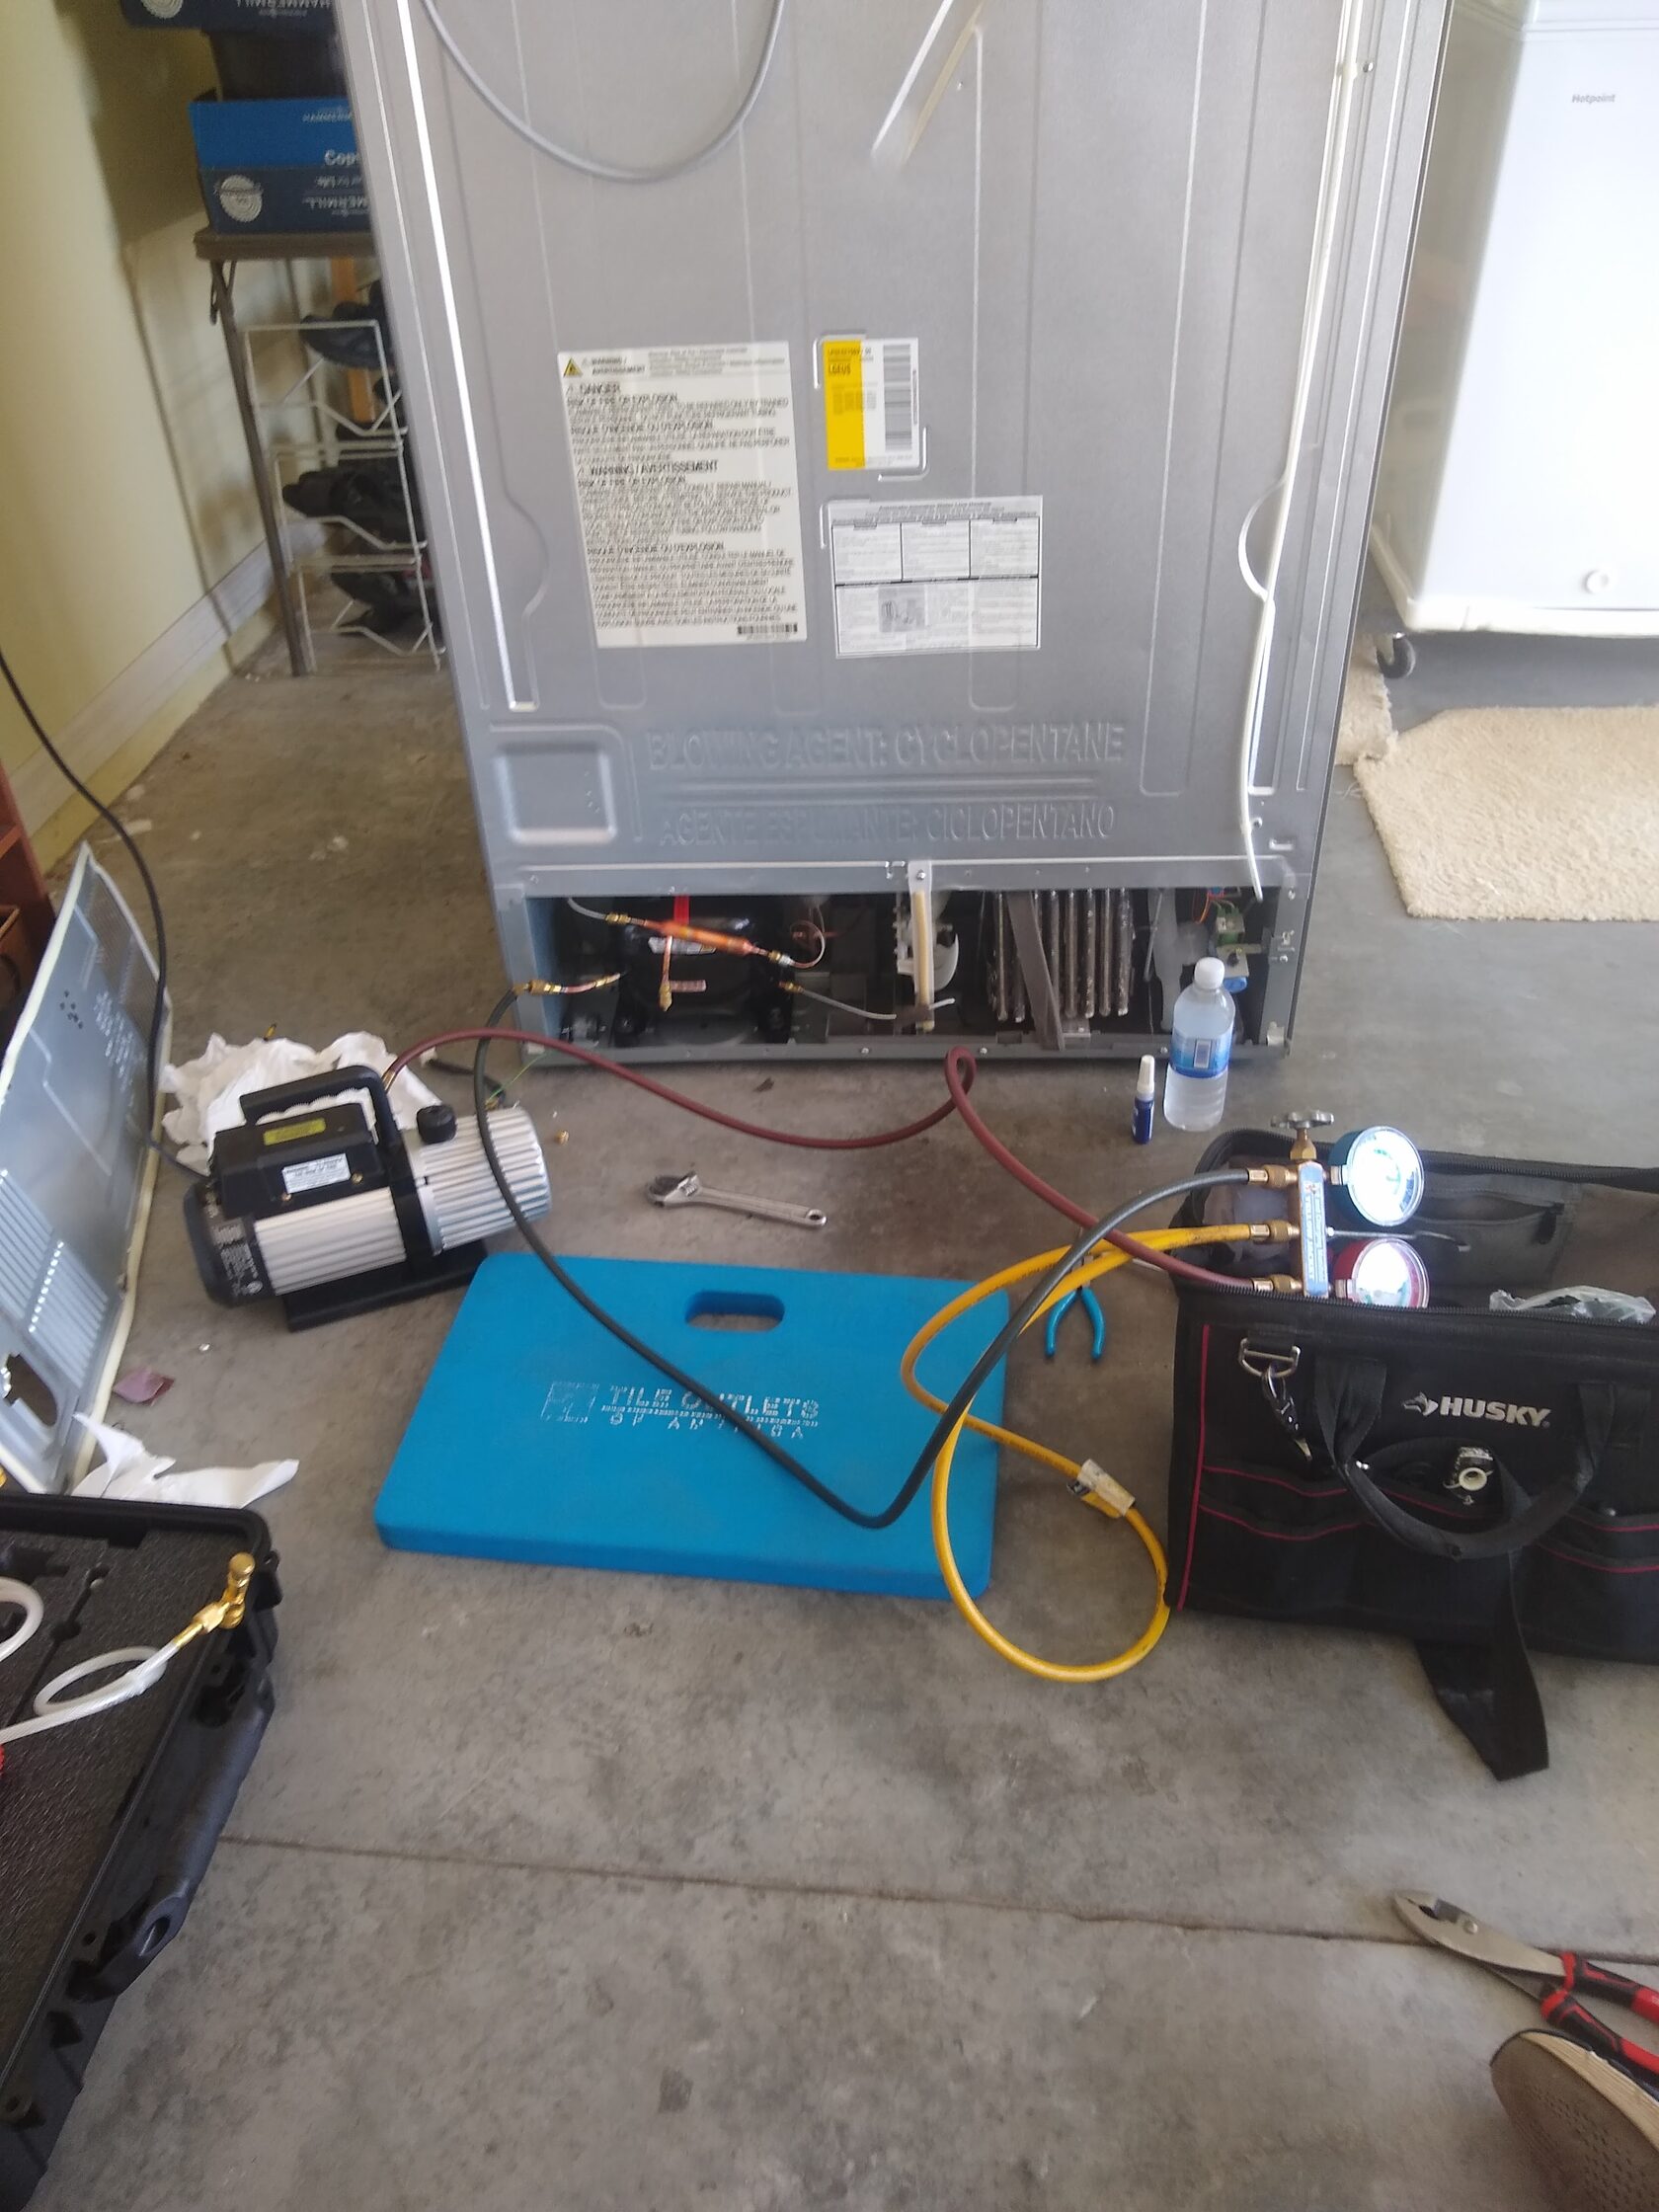 preparing to replace the LG refrigerator compressor